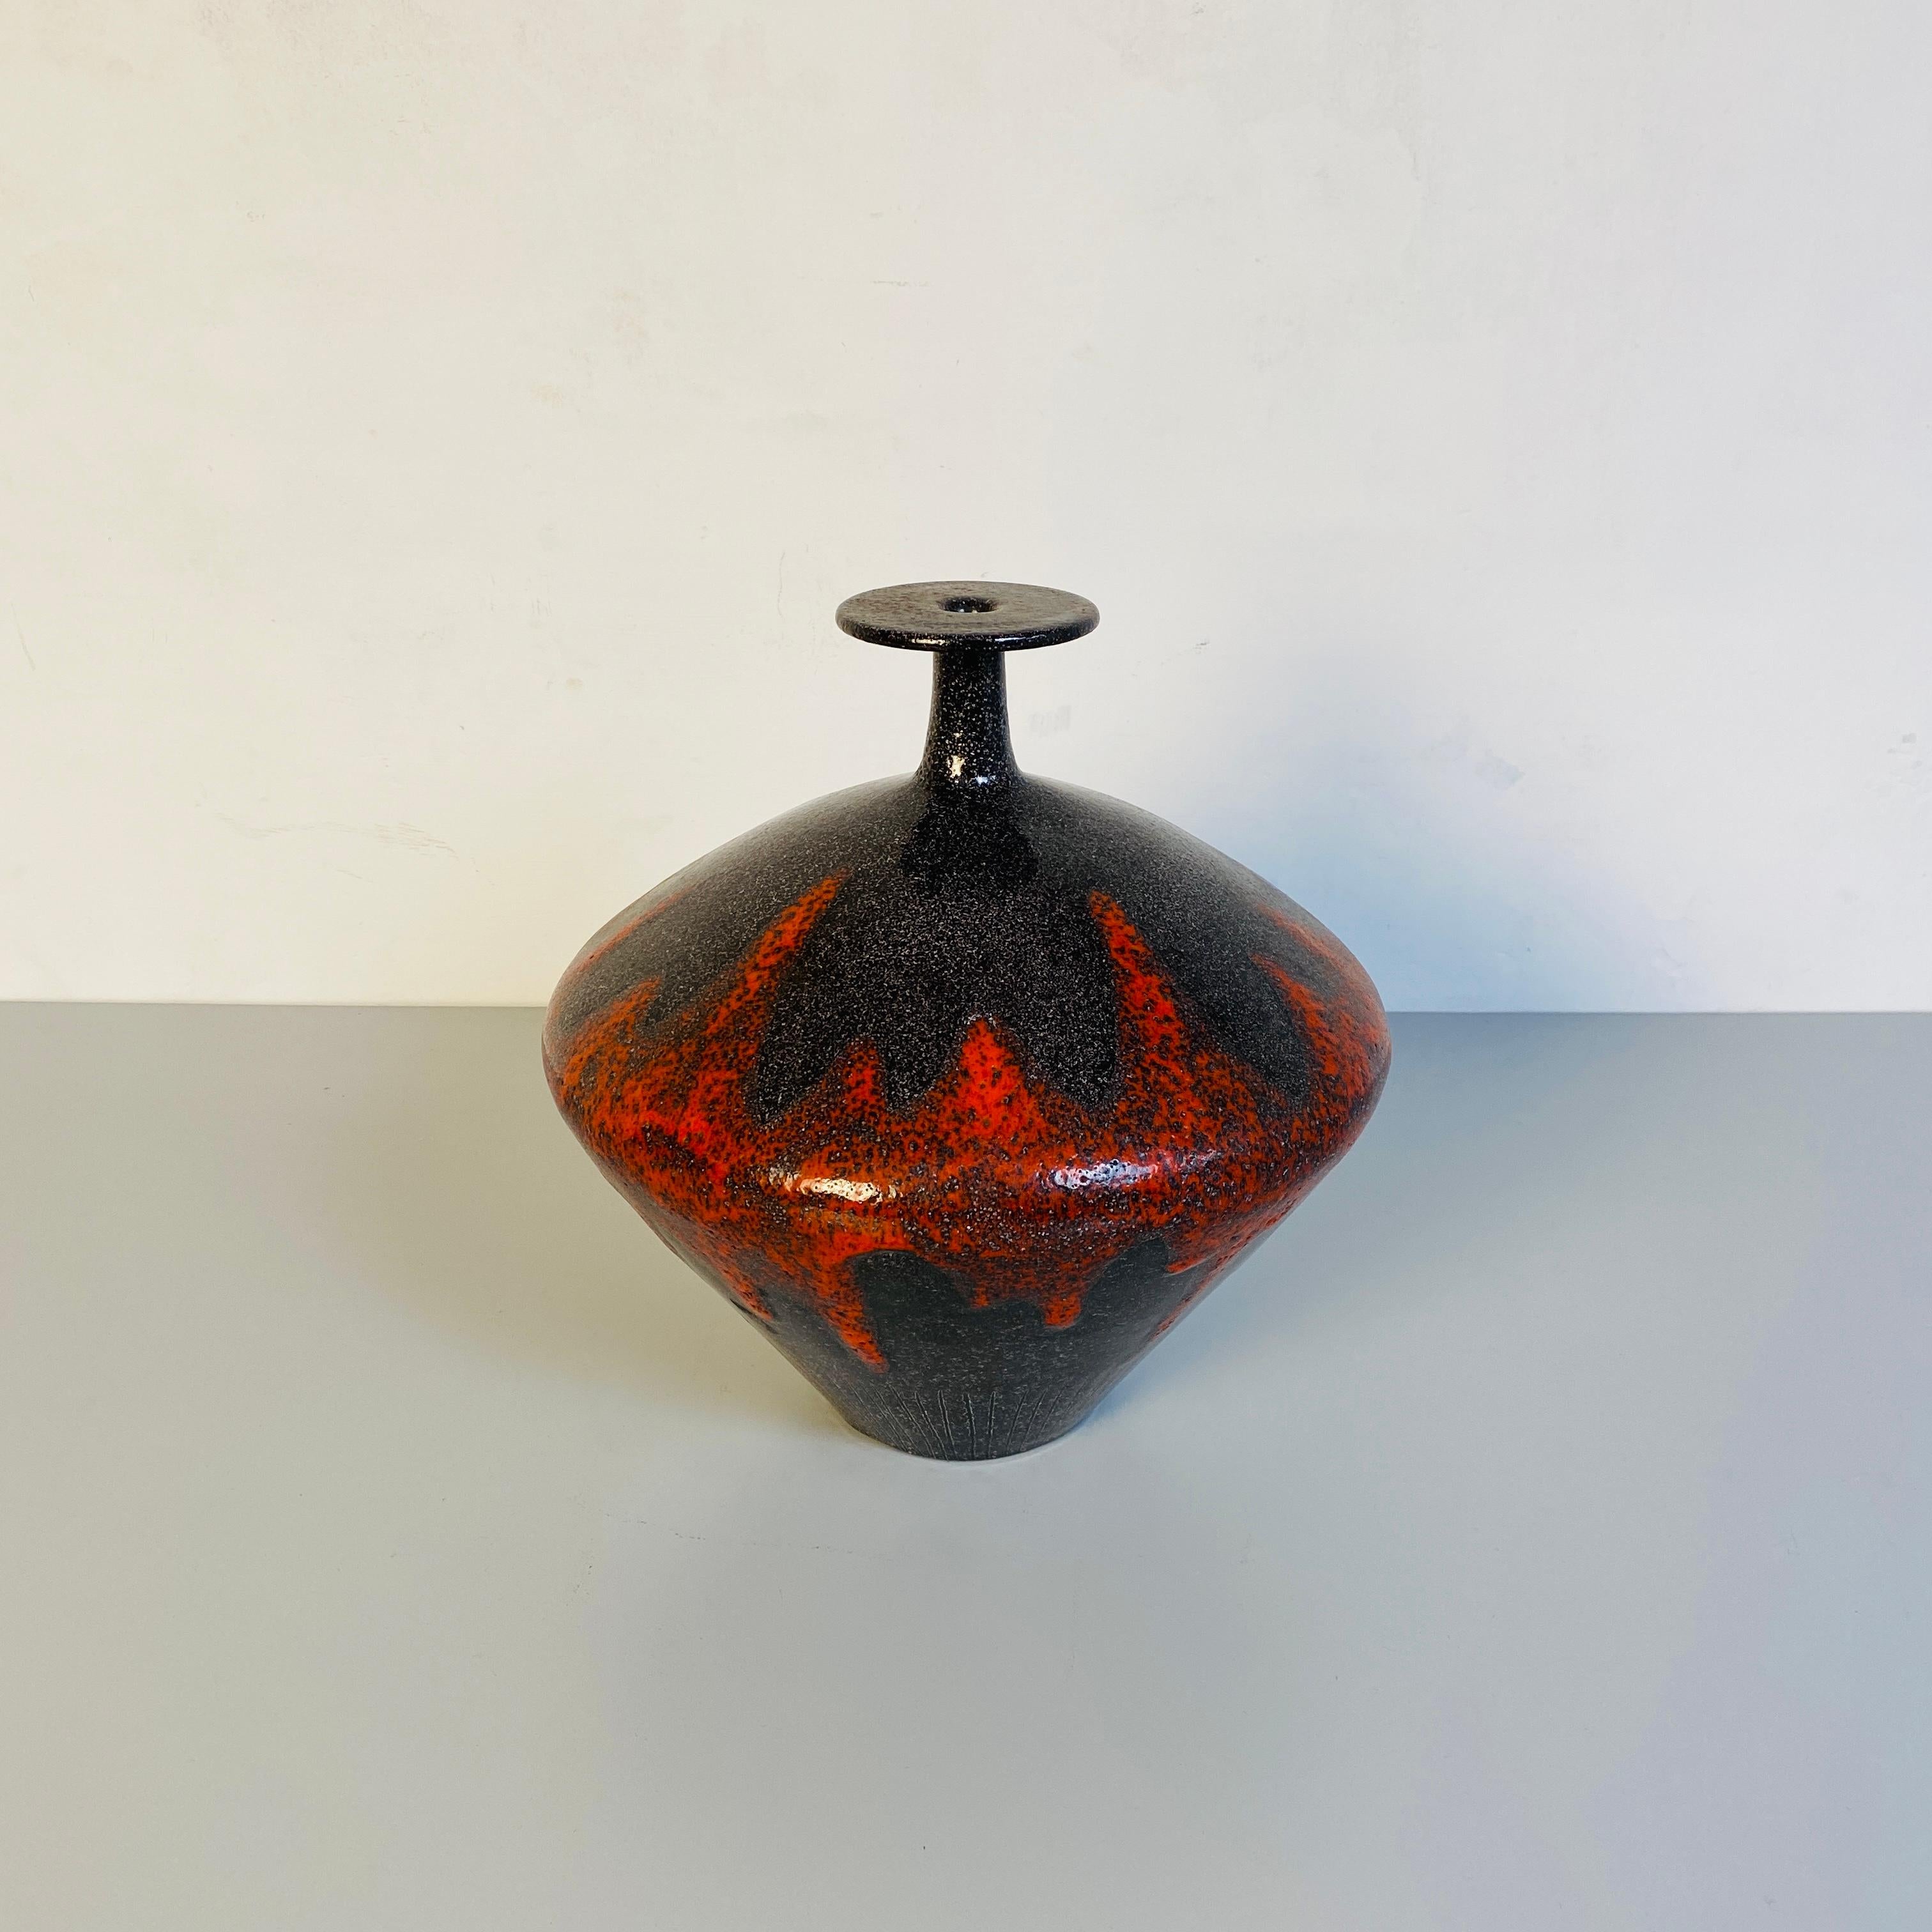 Italian Mid-Century Modern Ceramic Vase N 2\707 by San Polo Venezia, 1960s In Good Condition For Sale In MIlano, IT